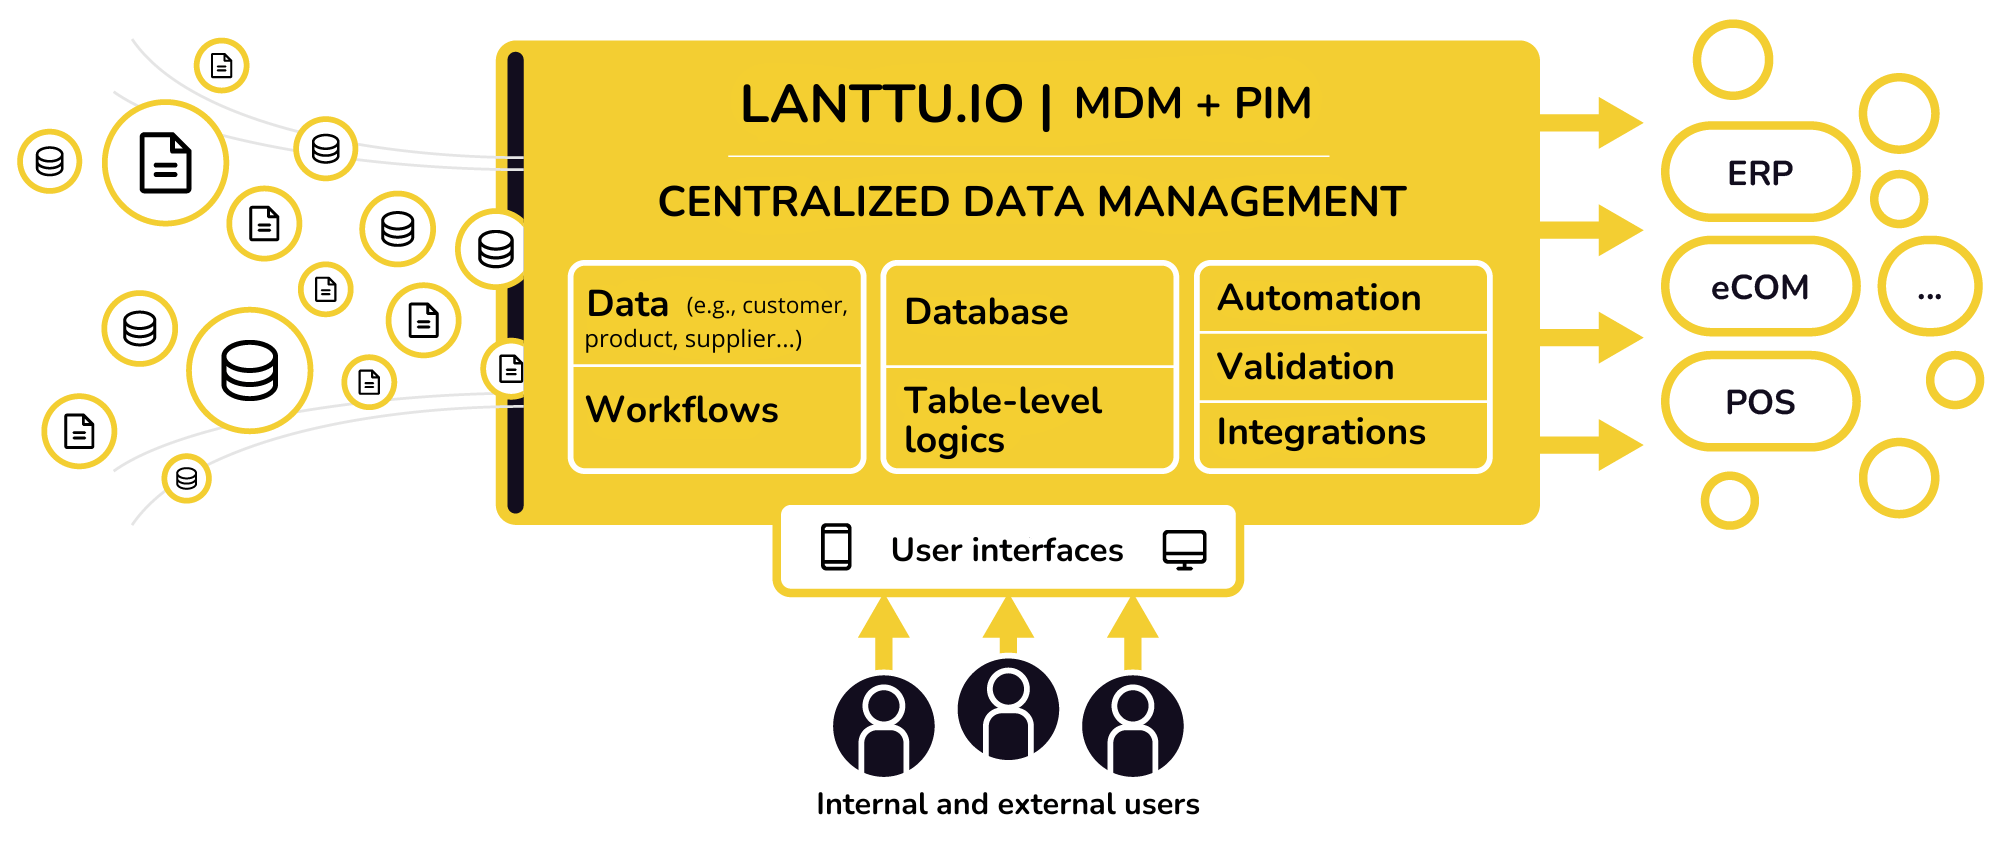 Centralized data management, Lanttu.io MDM & PIM